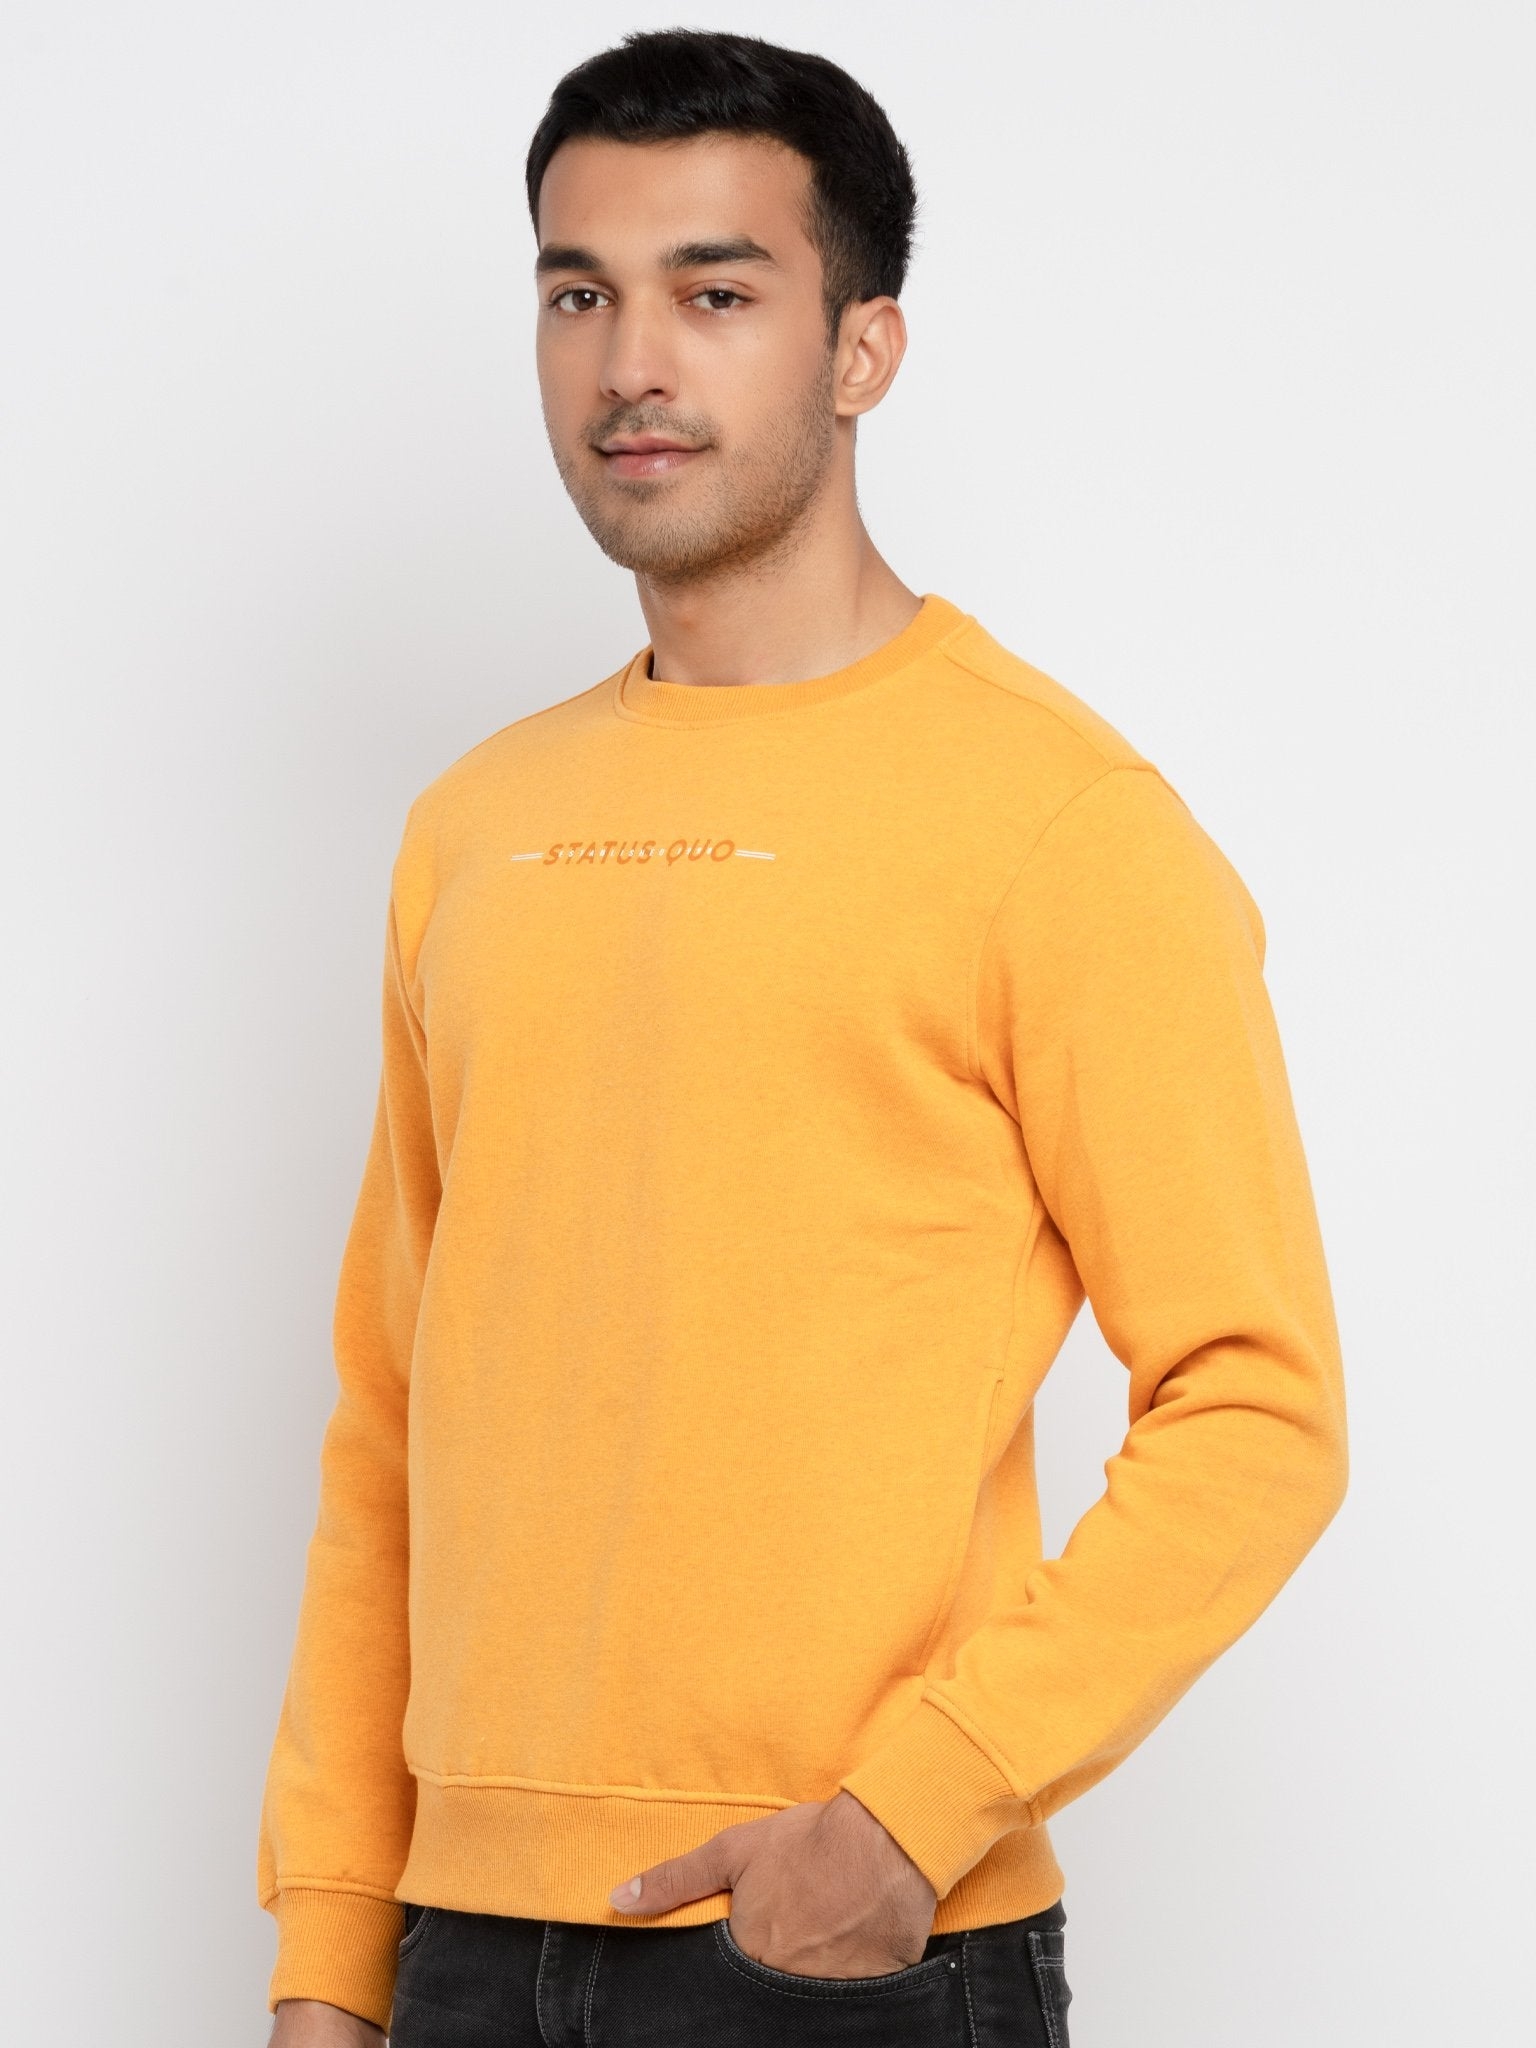 Status Quo | Men's Yellow Polycotton Printed Sweatshirts 1